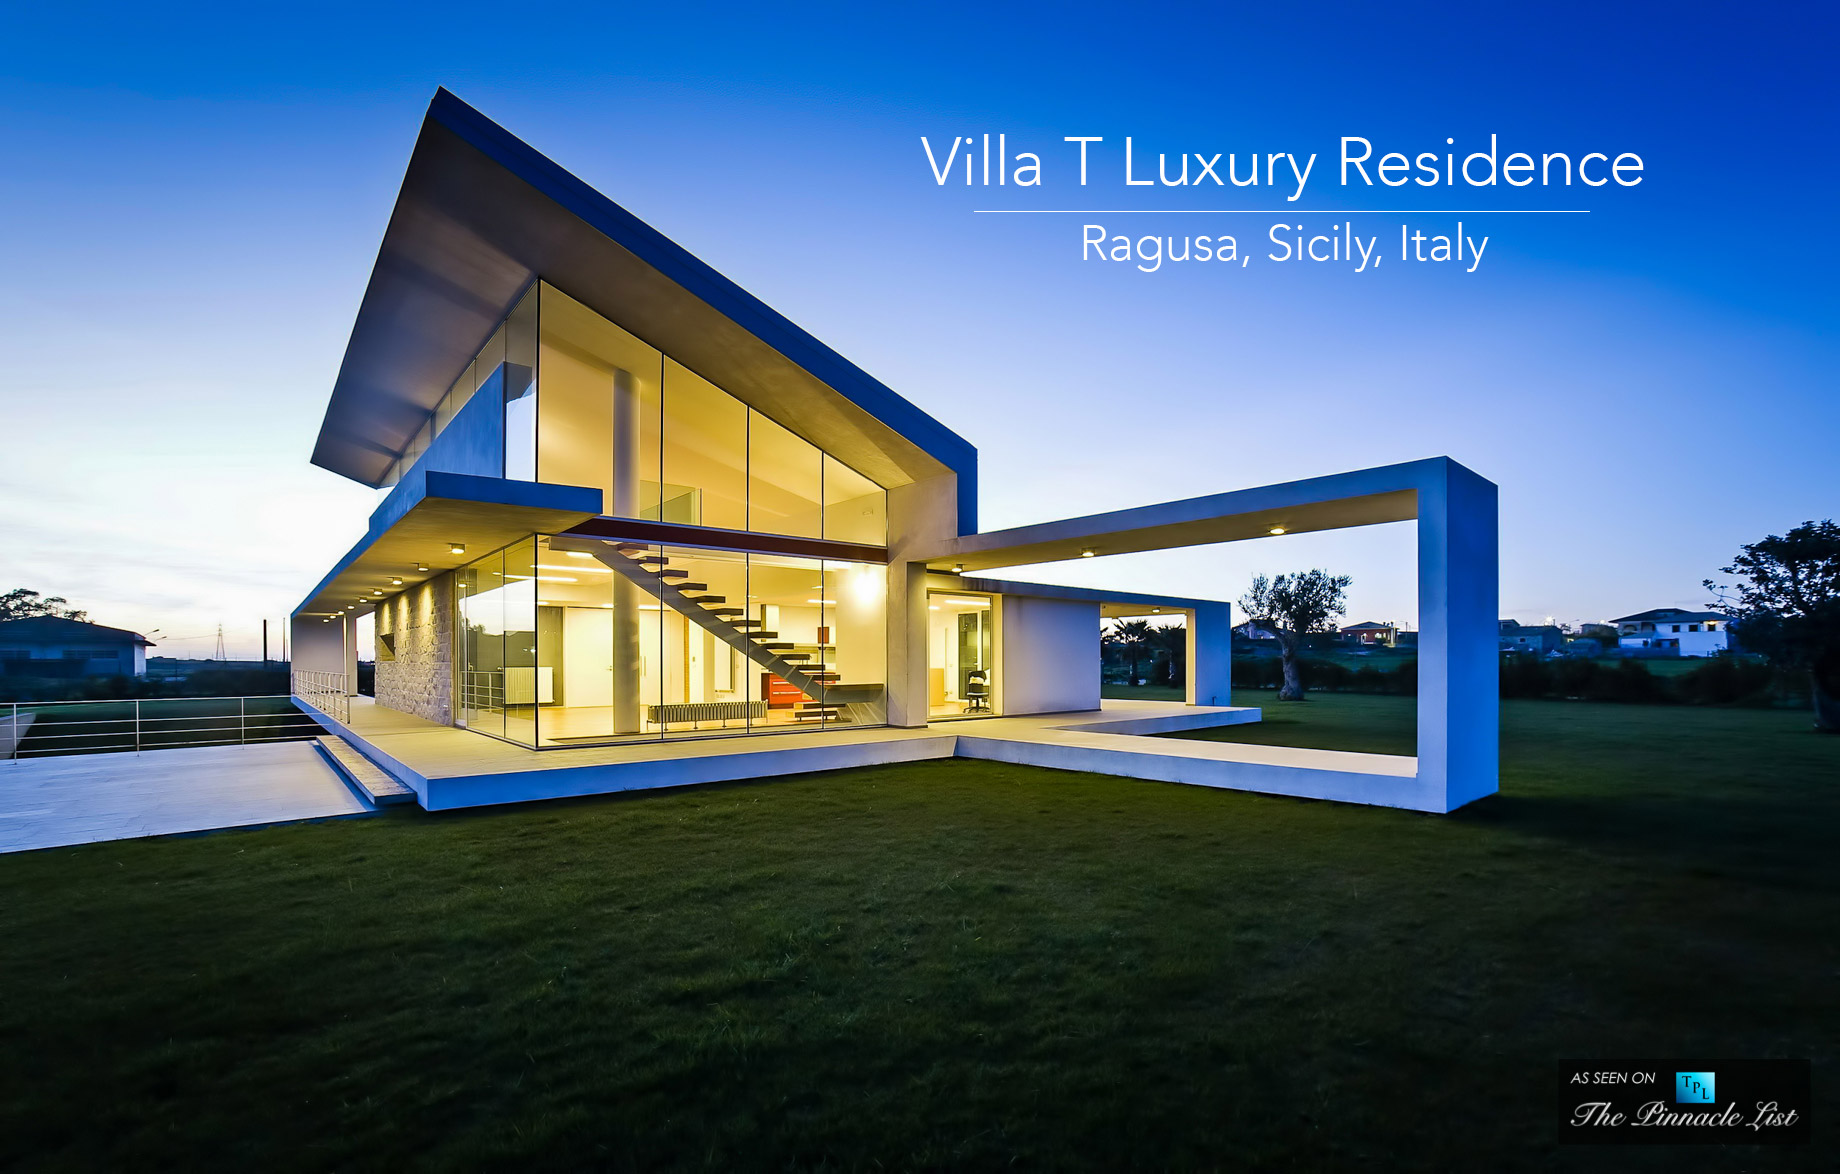 Villa T Luxury Residence – Ragusa, Sicily, Italy 